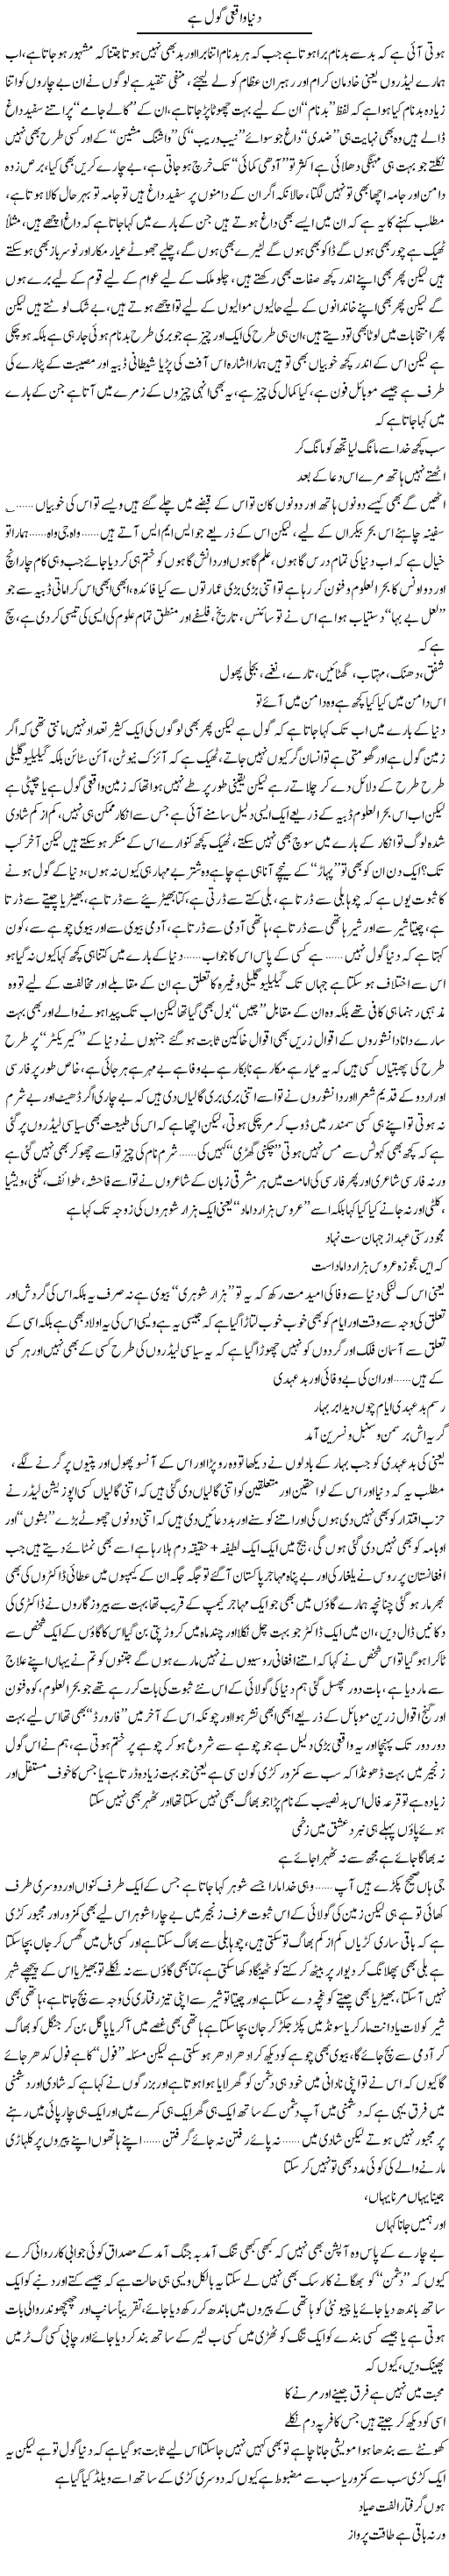 Dunya Waqai Gole Hai | Saad Ullah Jan Barq | Daily Urdu Columns